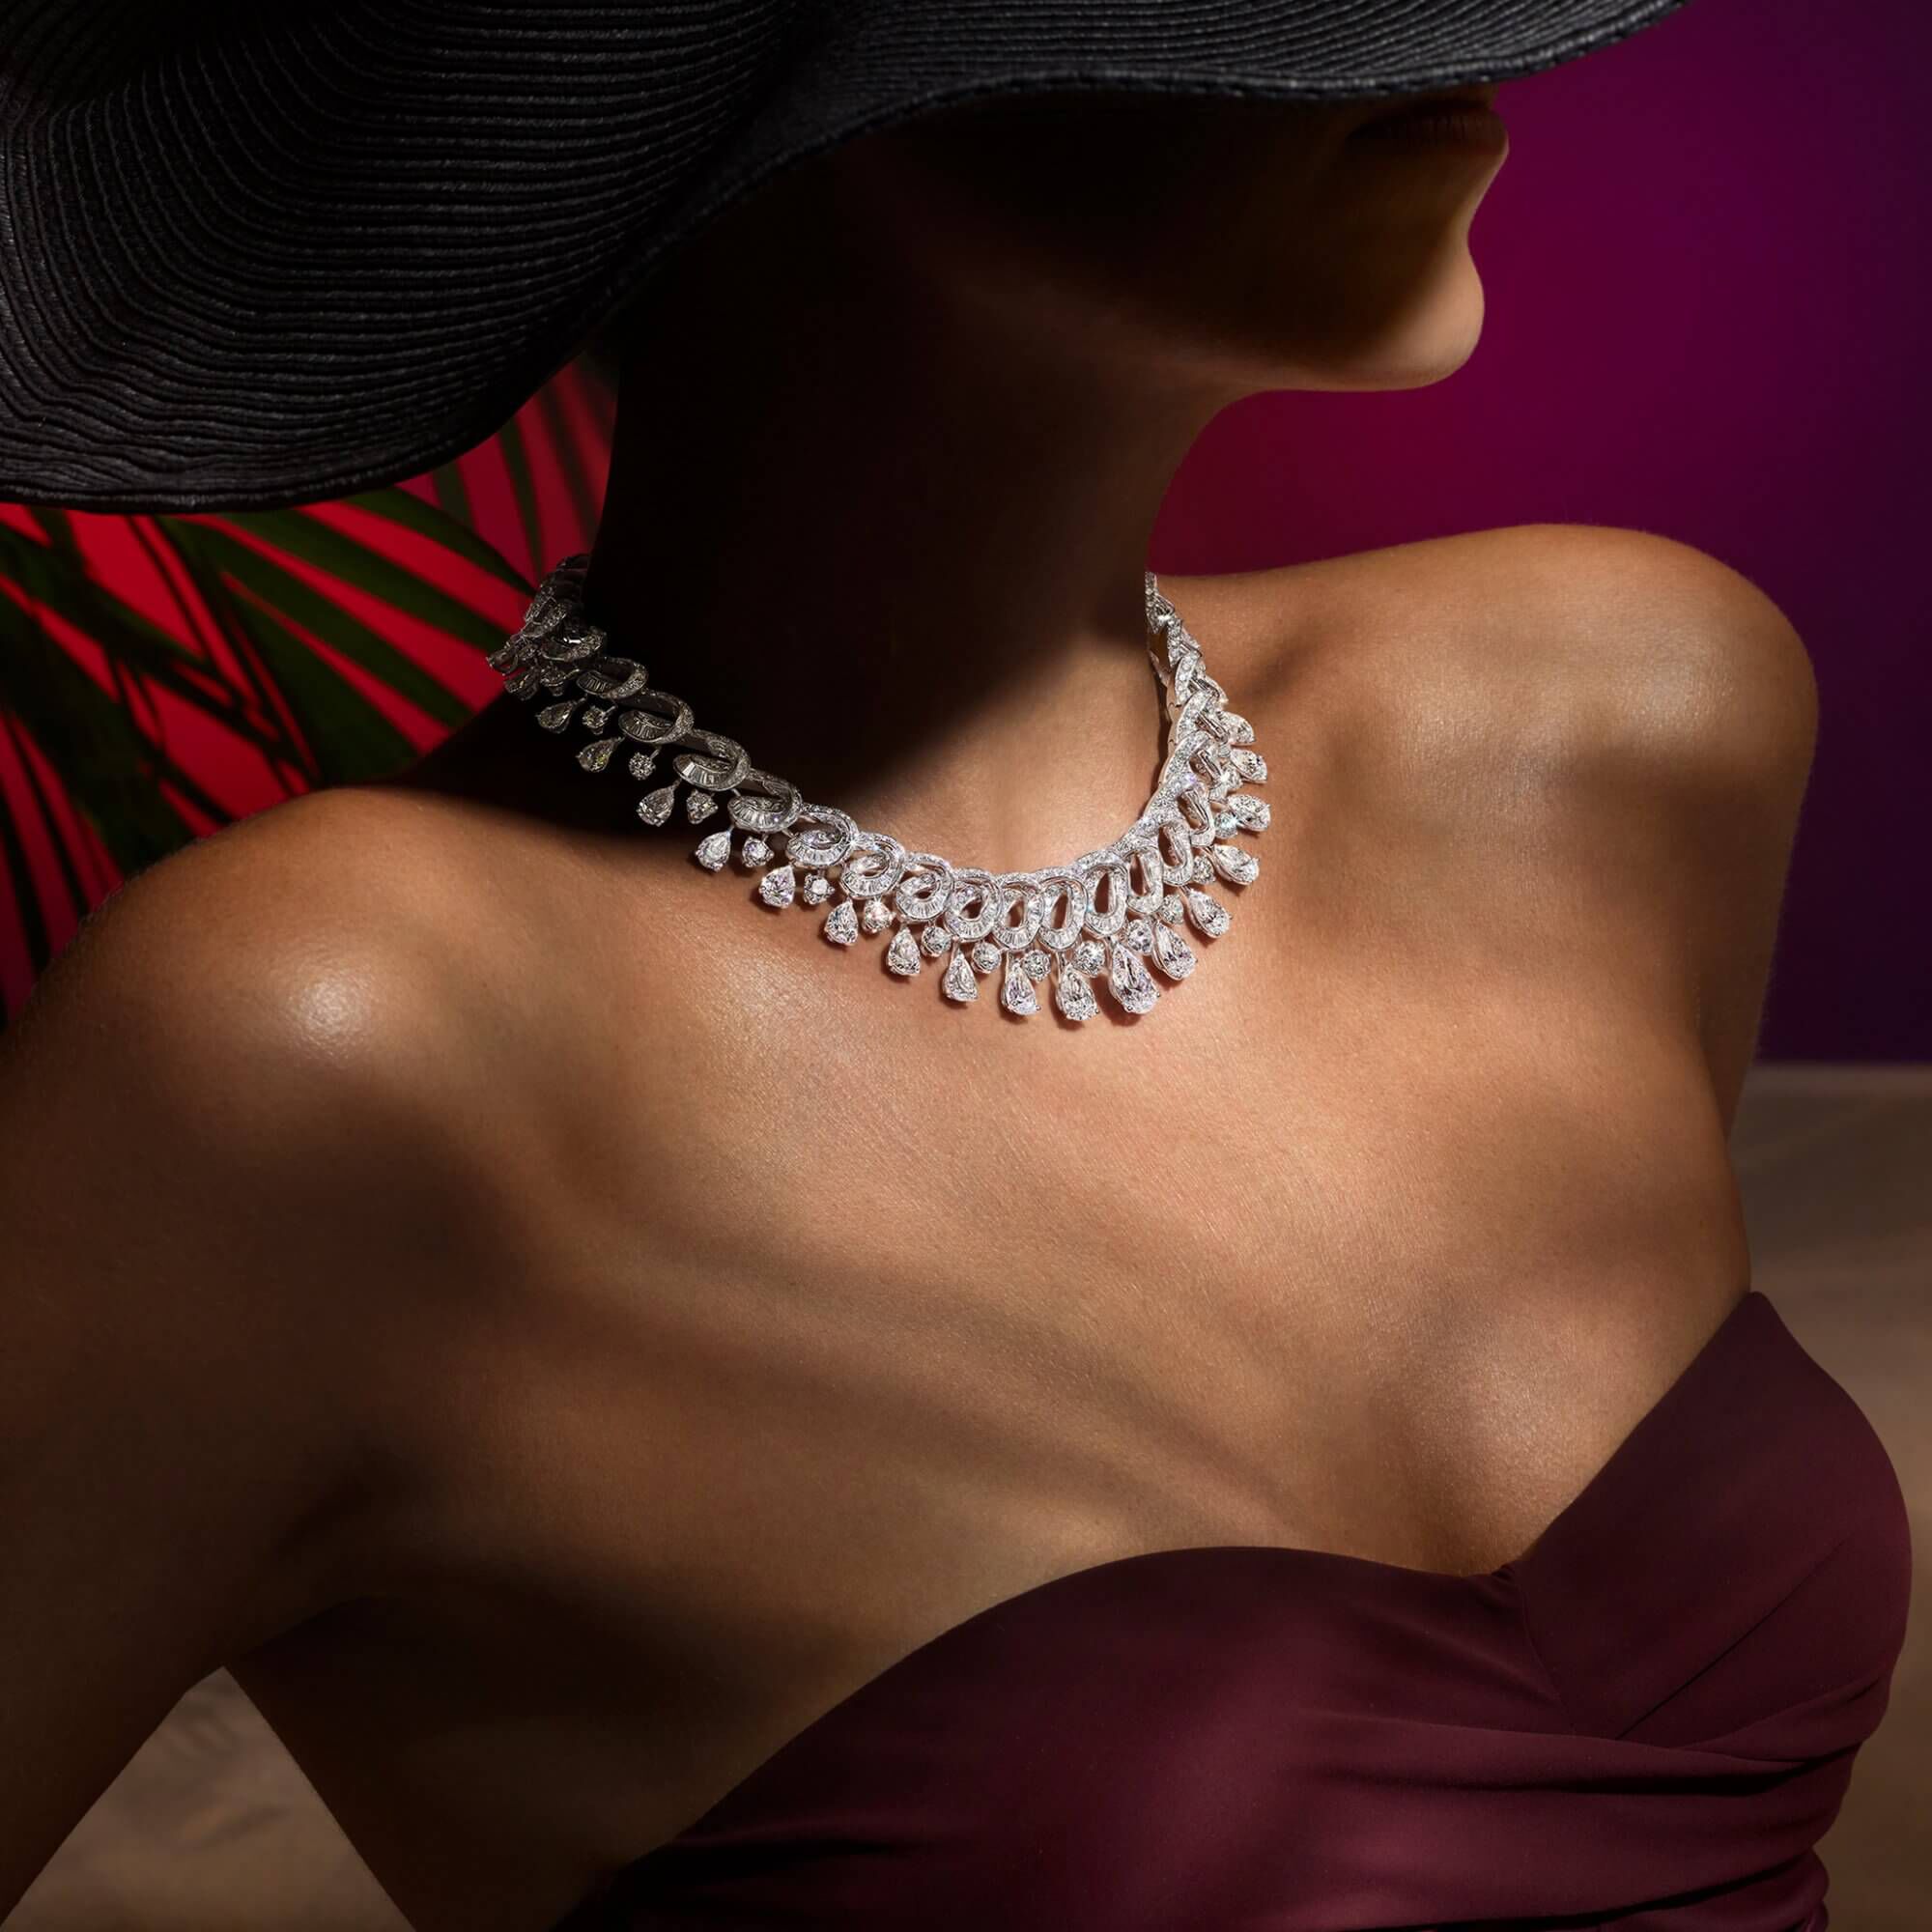 A model wearing a Graff diamond necklace